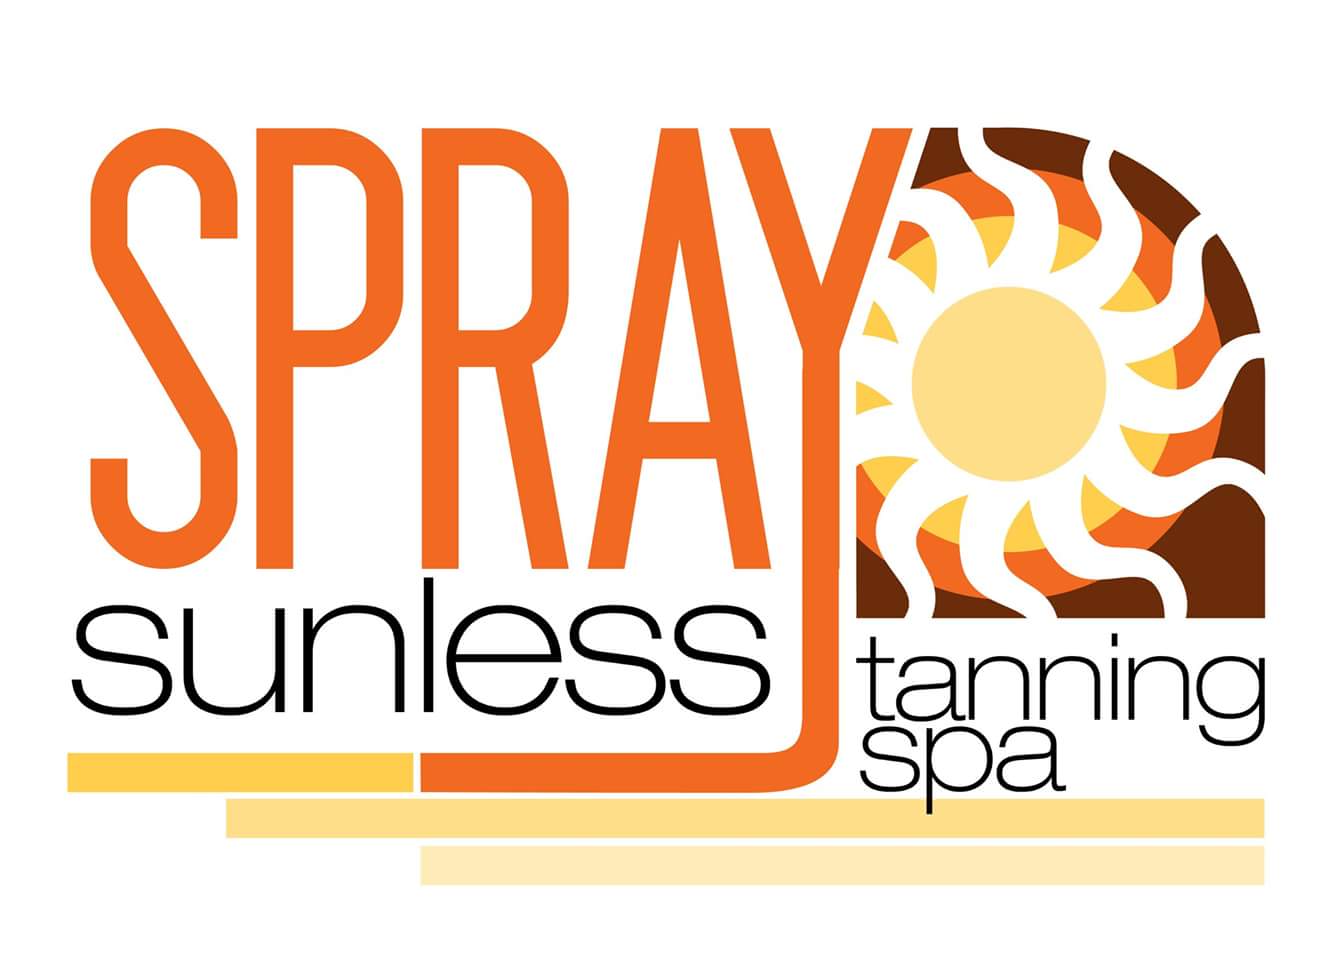 Spray Sunless Tanning Spa